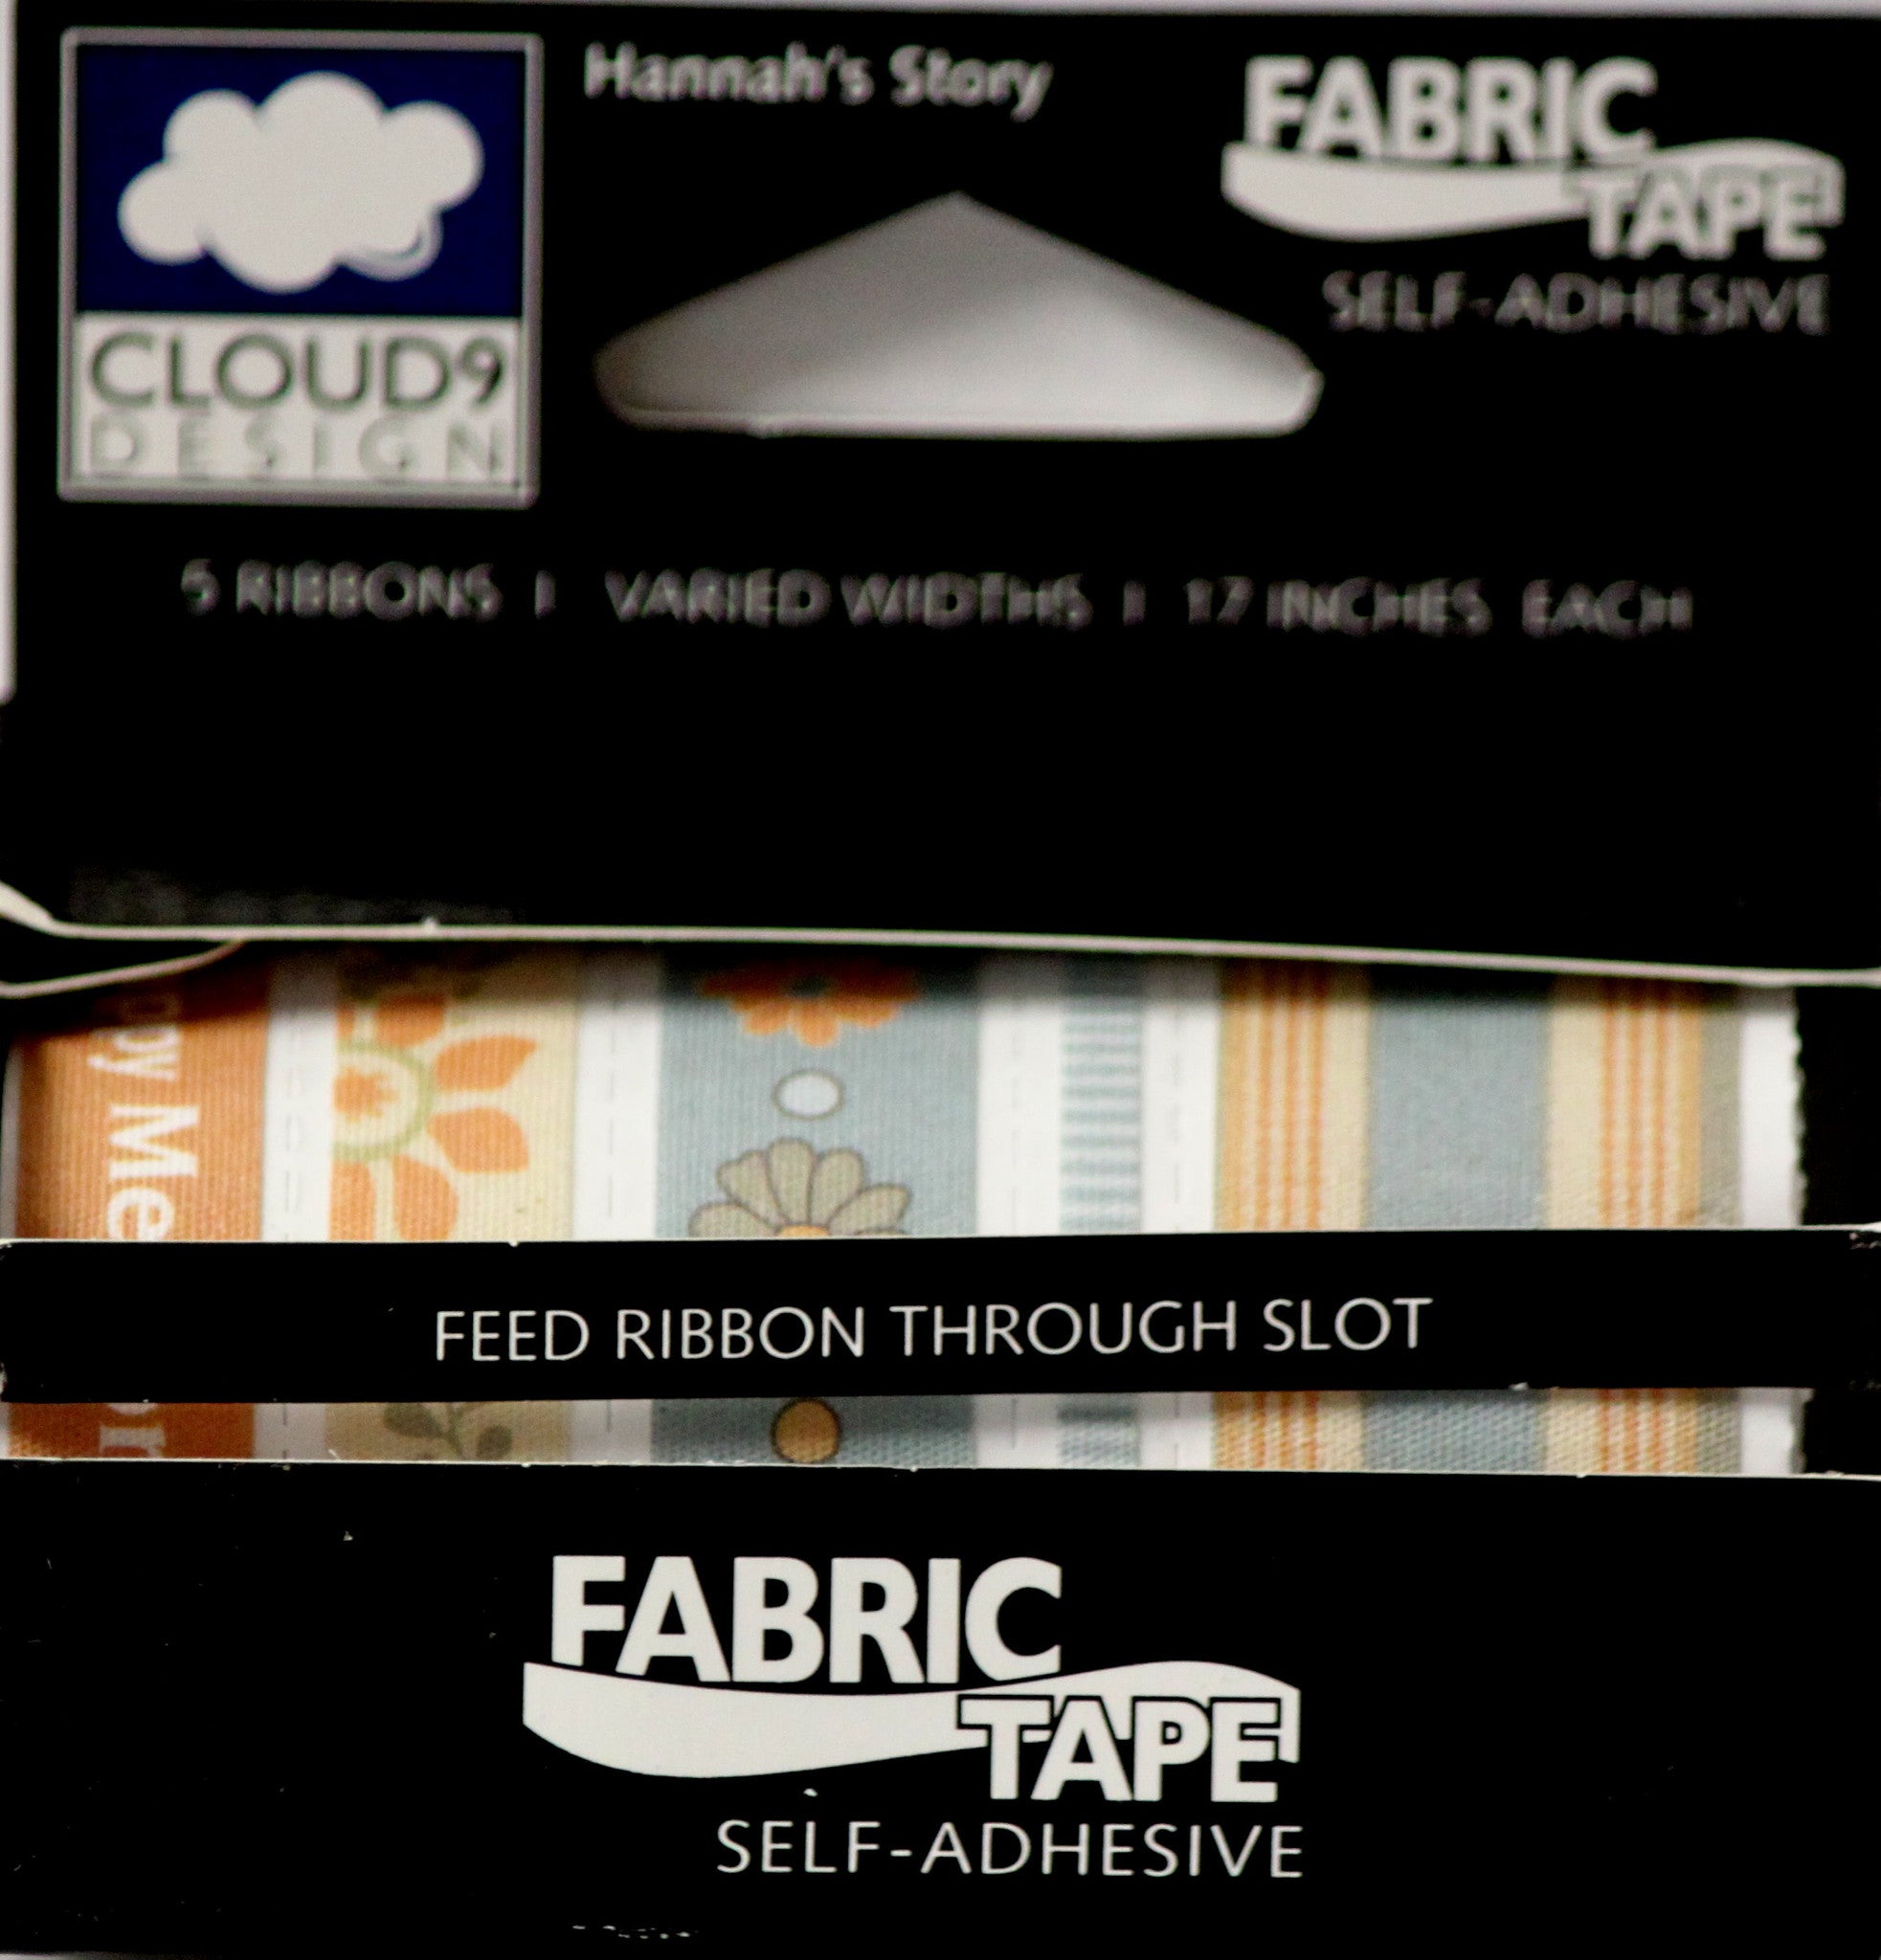 Cloud 9 Design Hannah's Story Self-Adhesive Fabric Tape Collection - SCRAPBOOKFARE